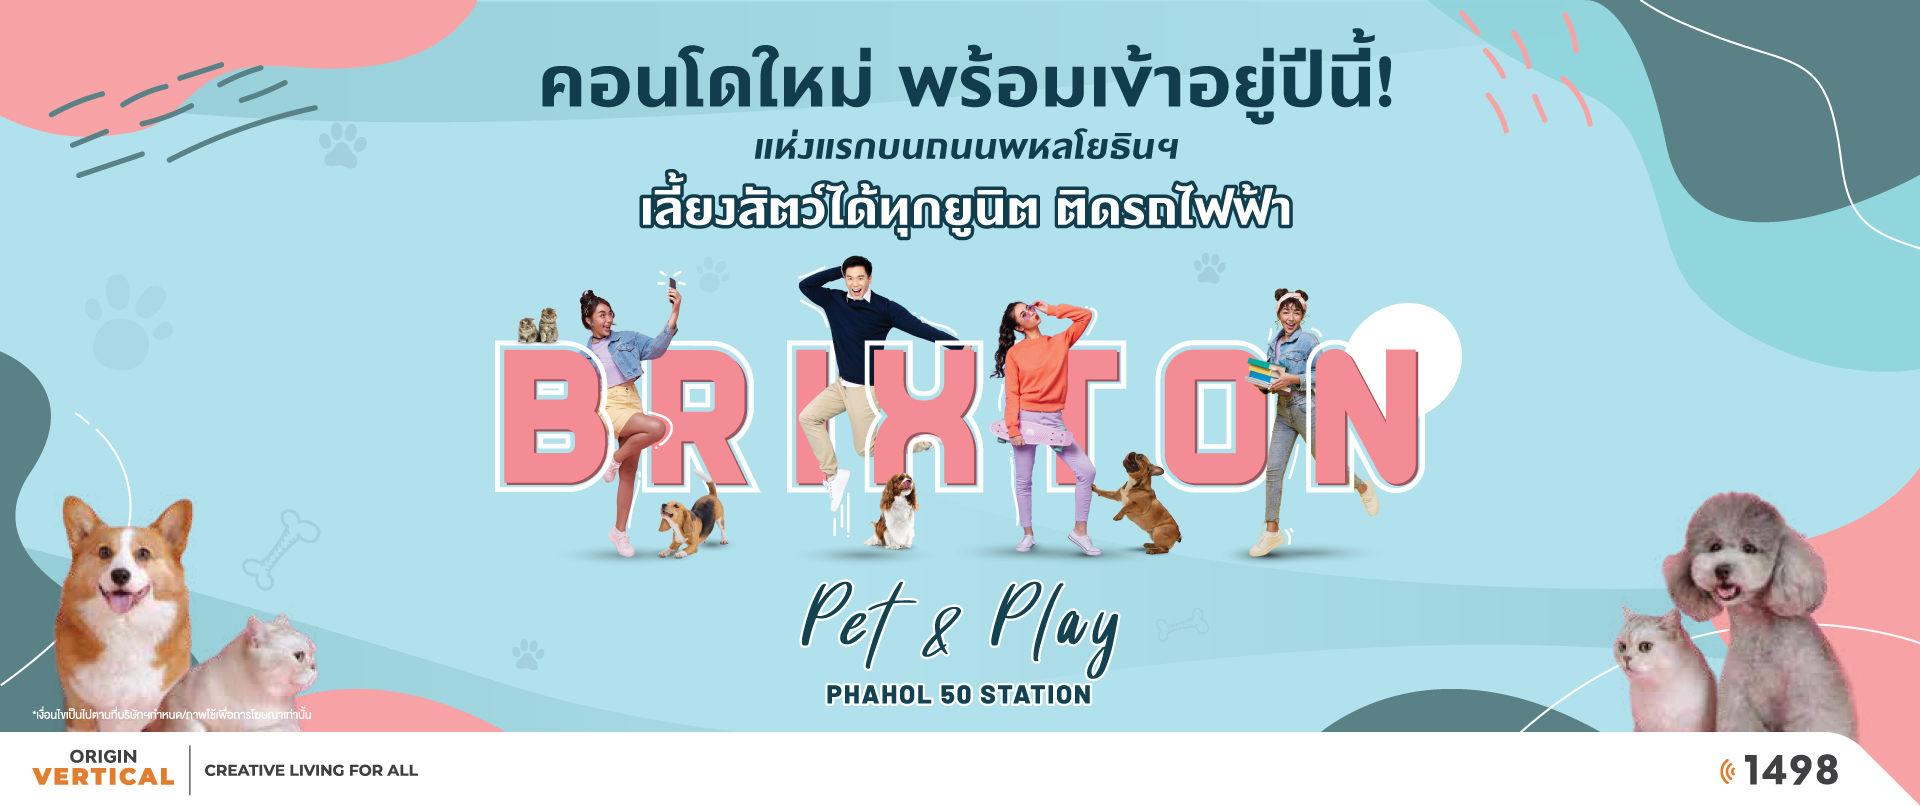 Brixton Pet & Play Phahol 50 Station Apr 24 PC